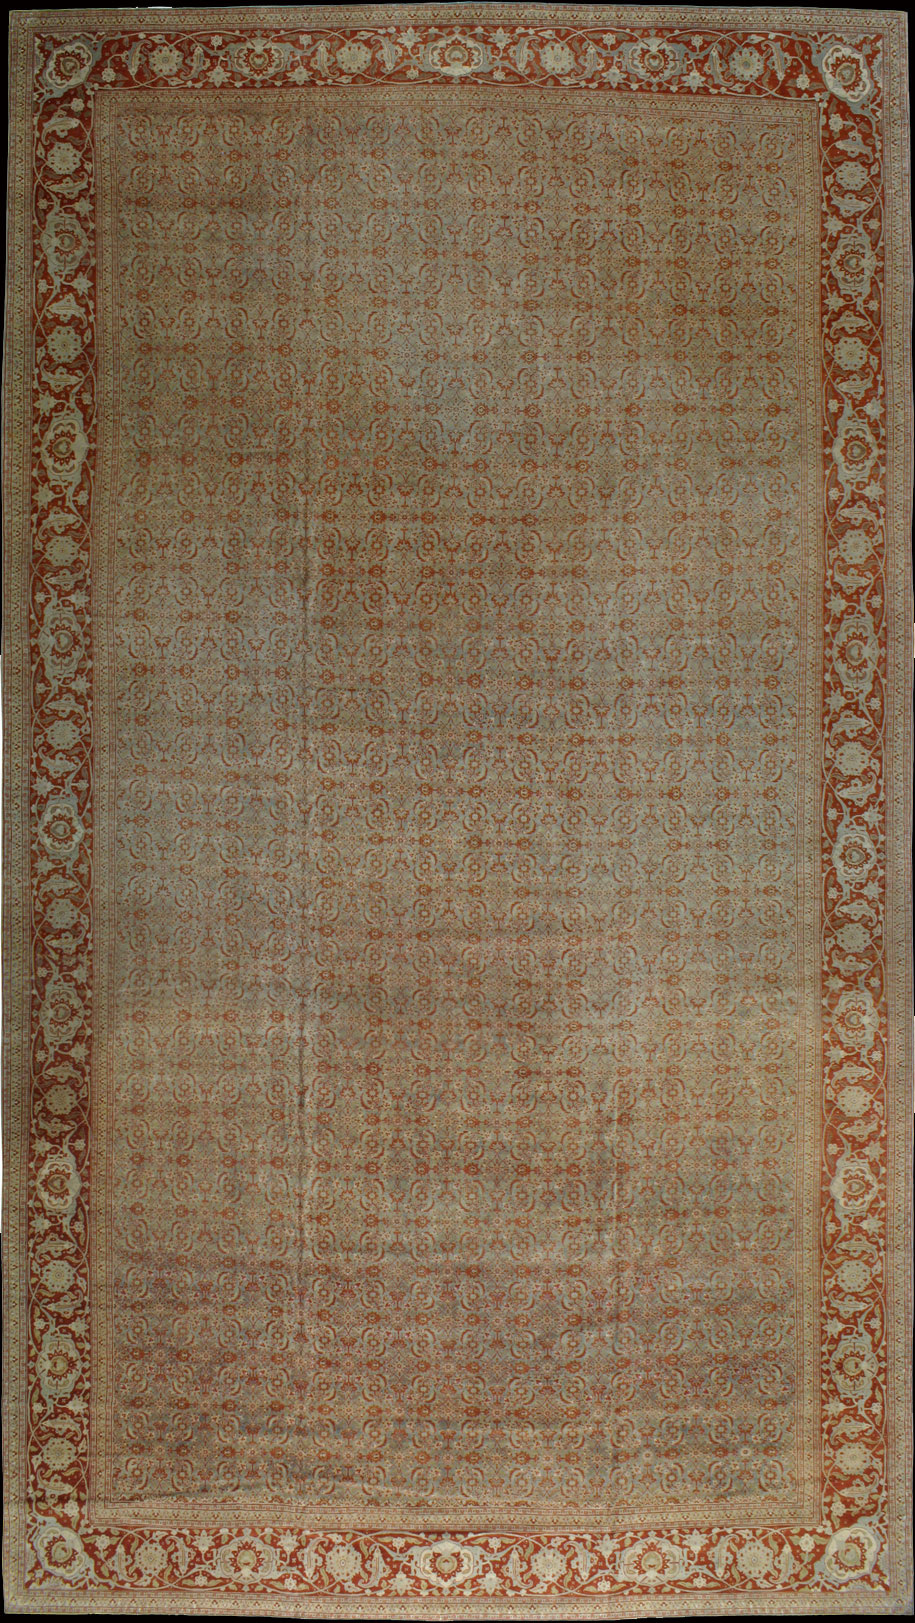 Antique tabriz Carpet - # 8499